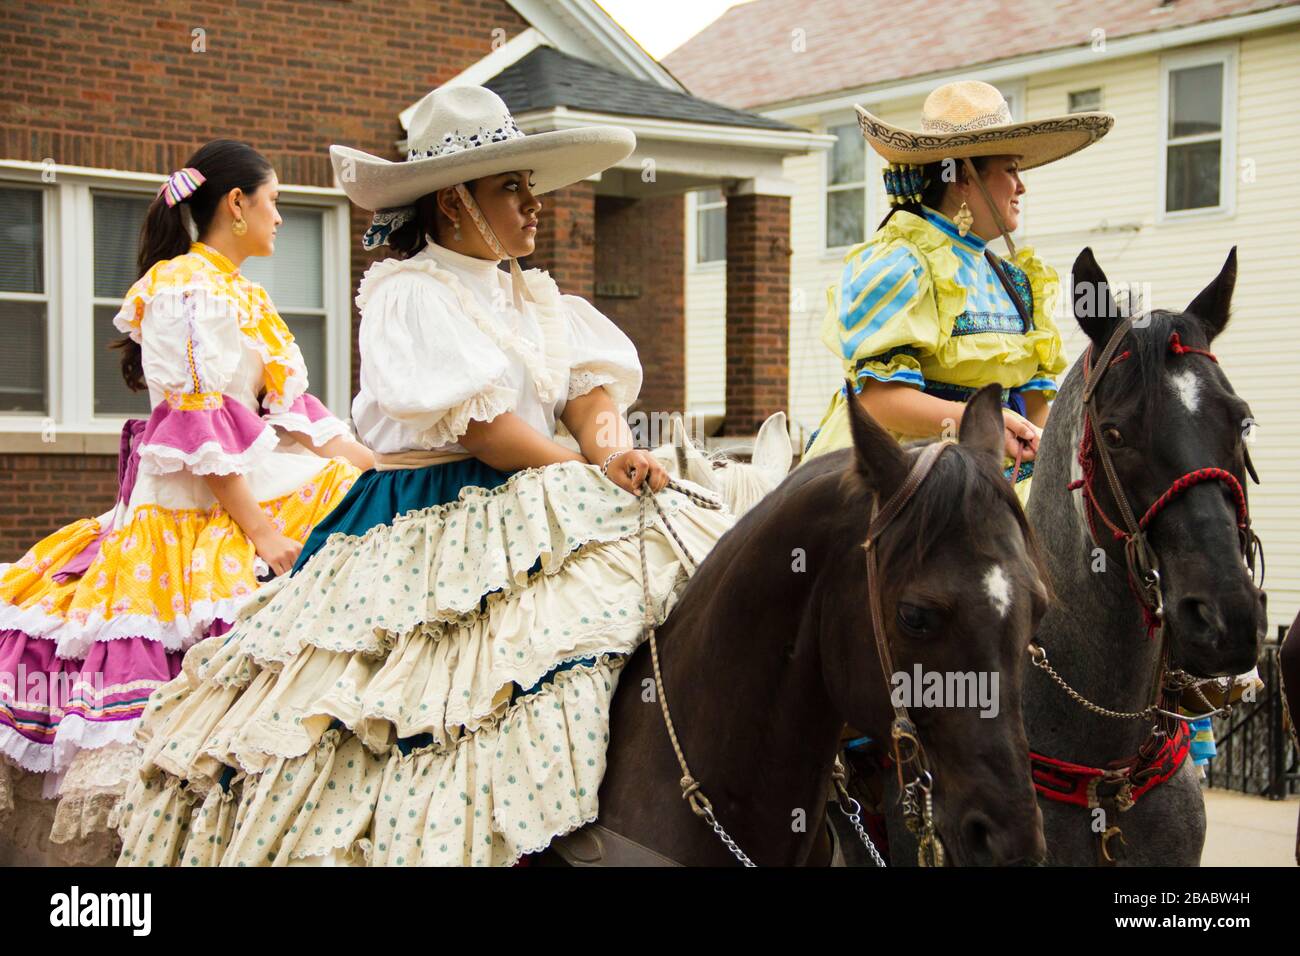 Street parade, Women in colorful dresses riding on horses, Pilsen, Chicago, Illinois, USA Stock Photo